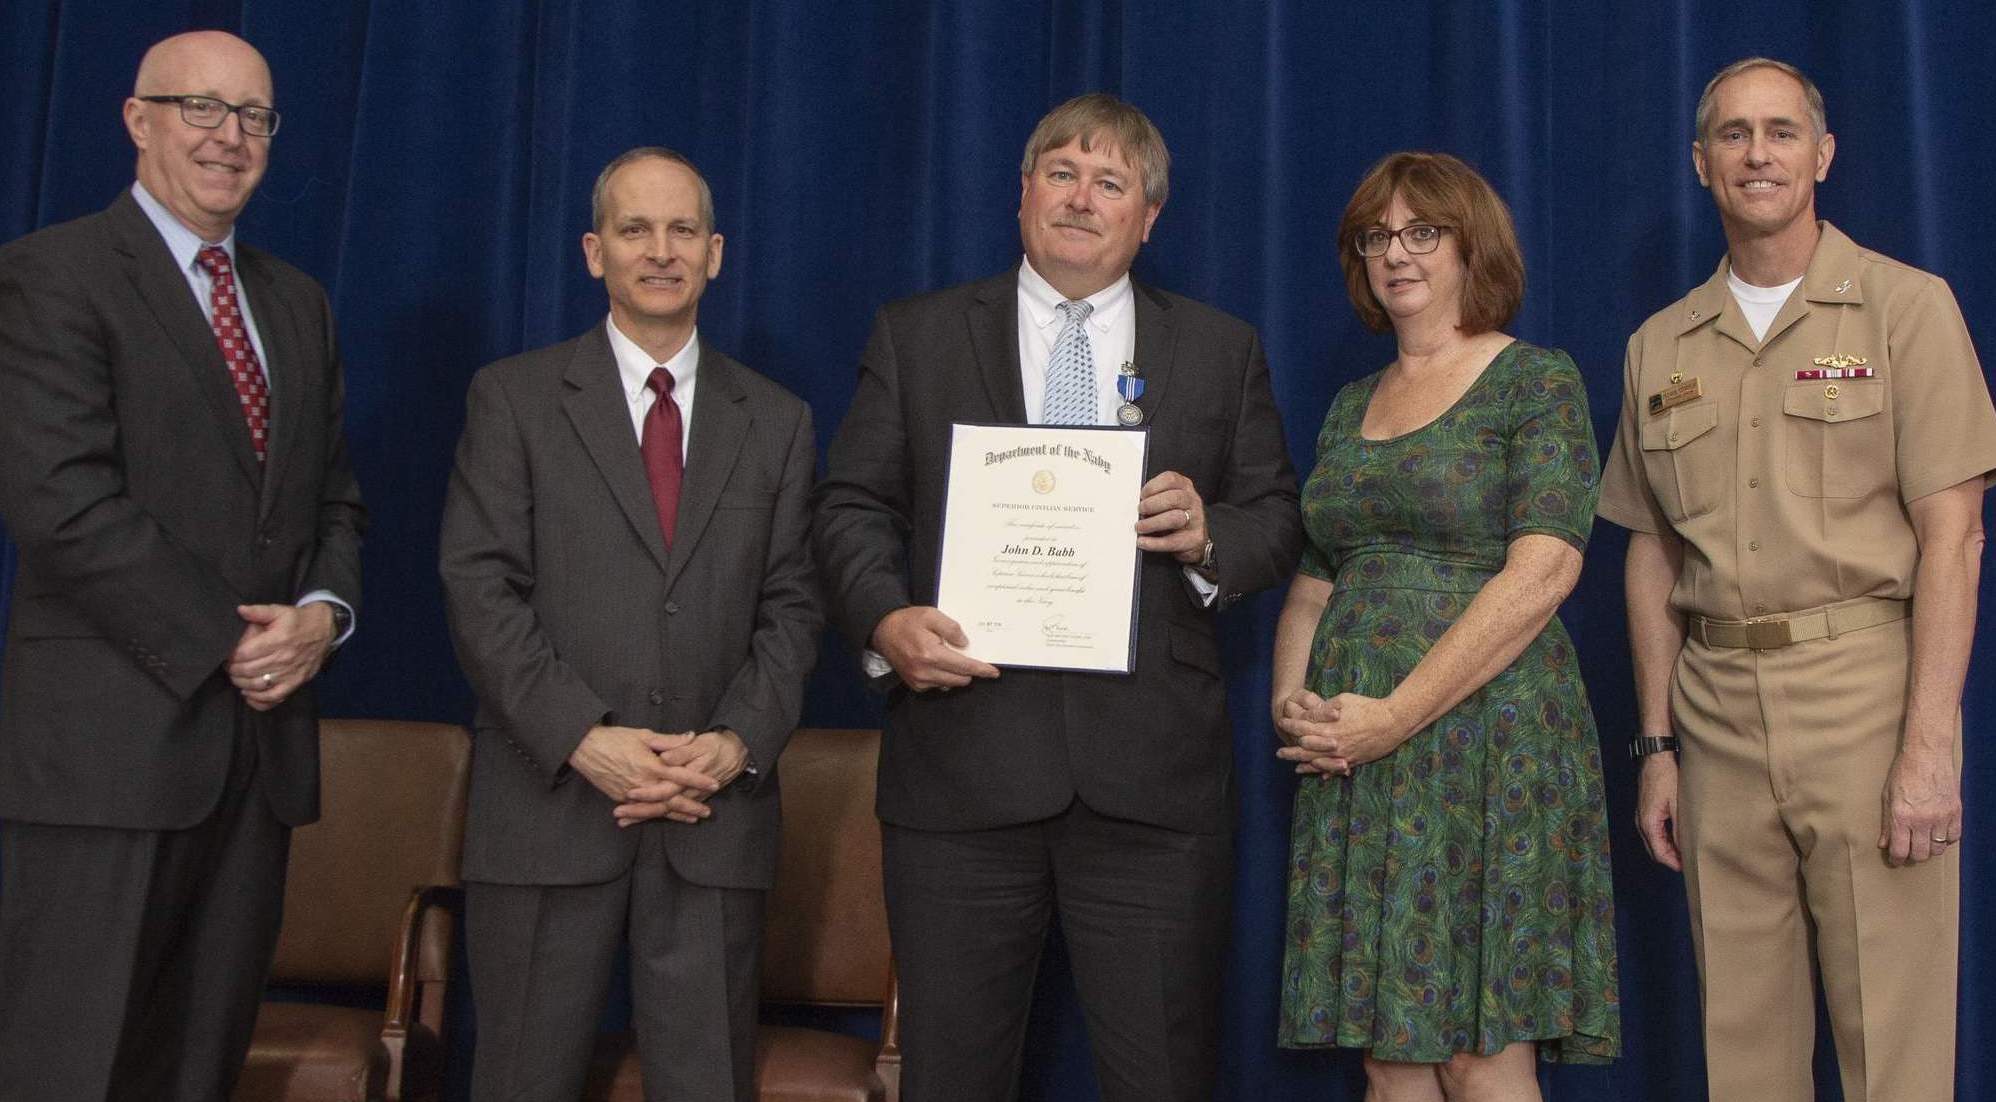 John Babb civilian award from U.S. Navy